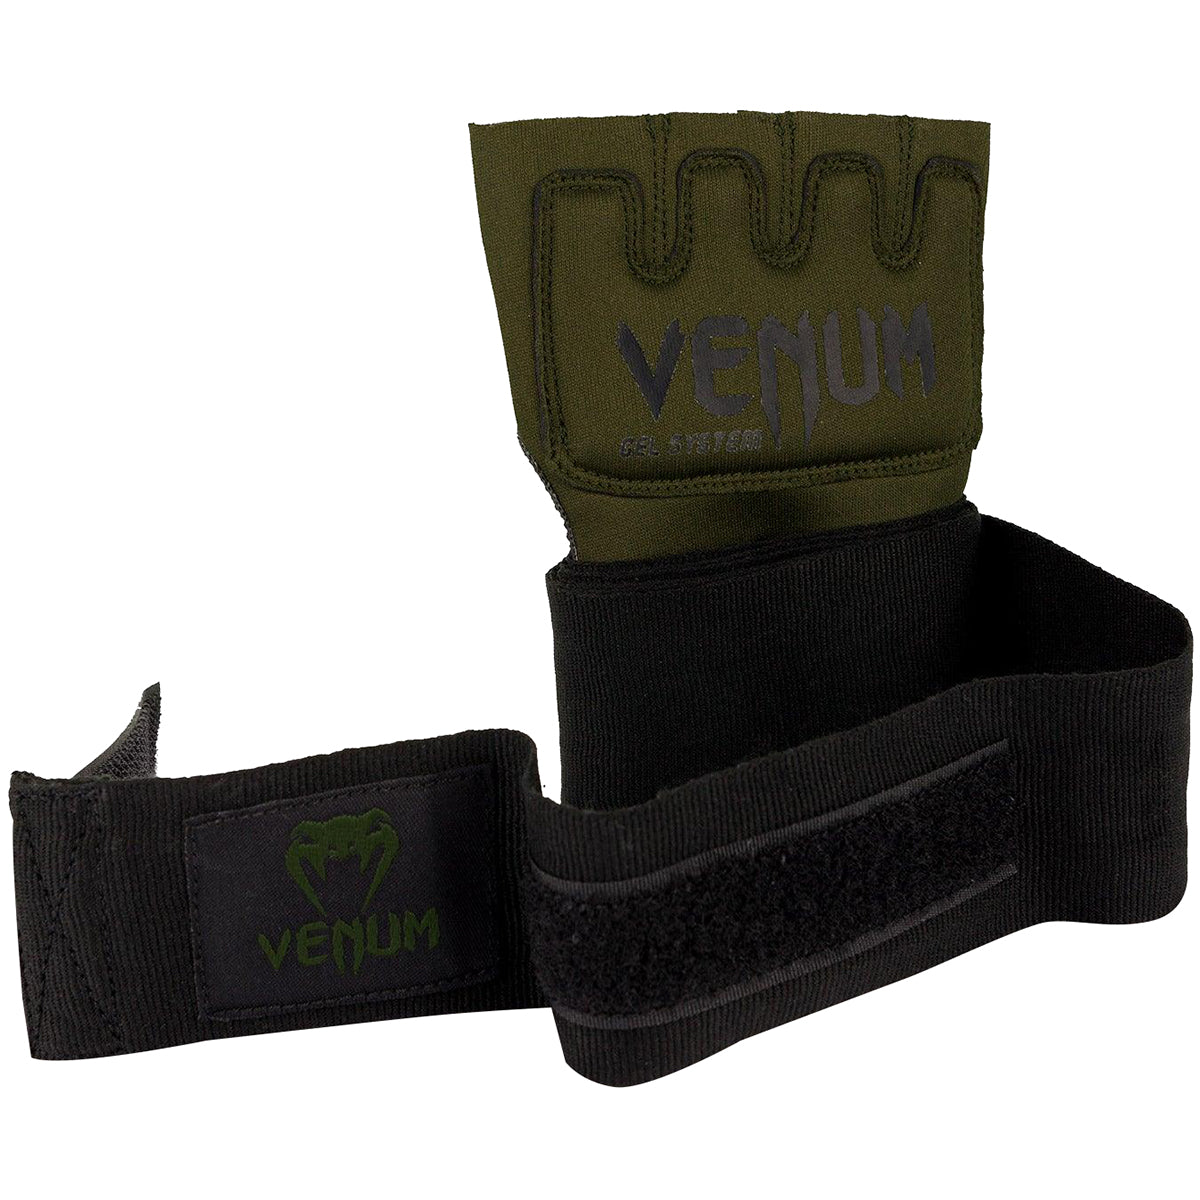 Venum Kontact Boxing Gel Glove Wraps - Khaki/Black Venum